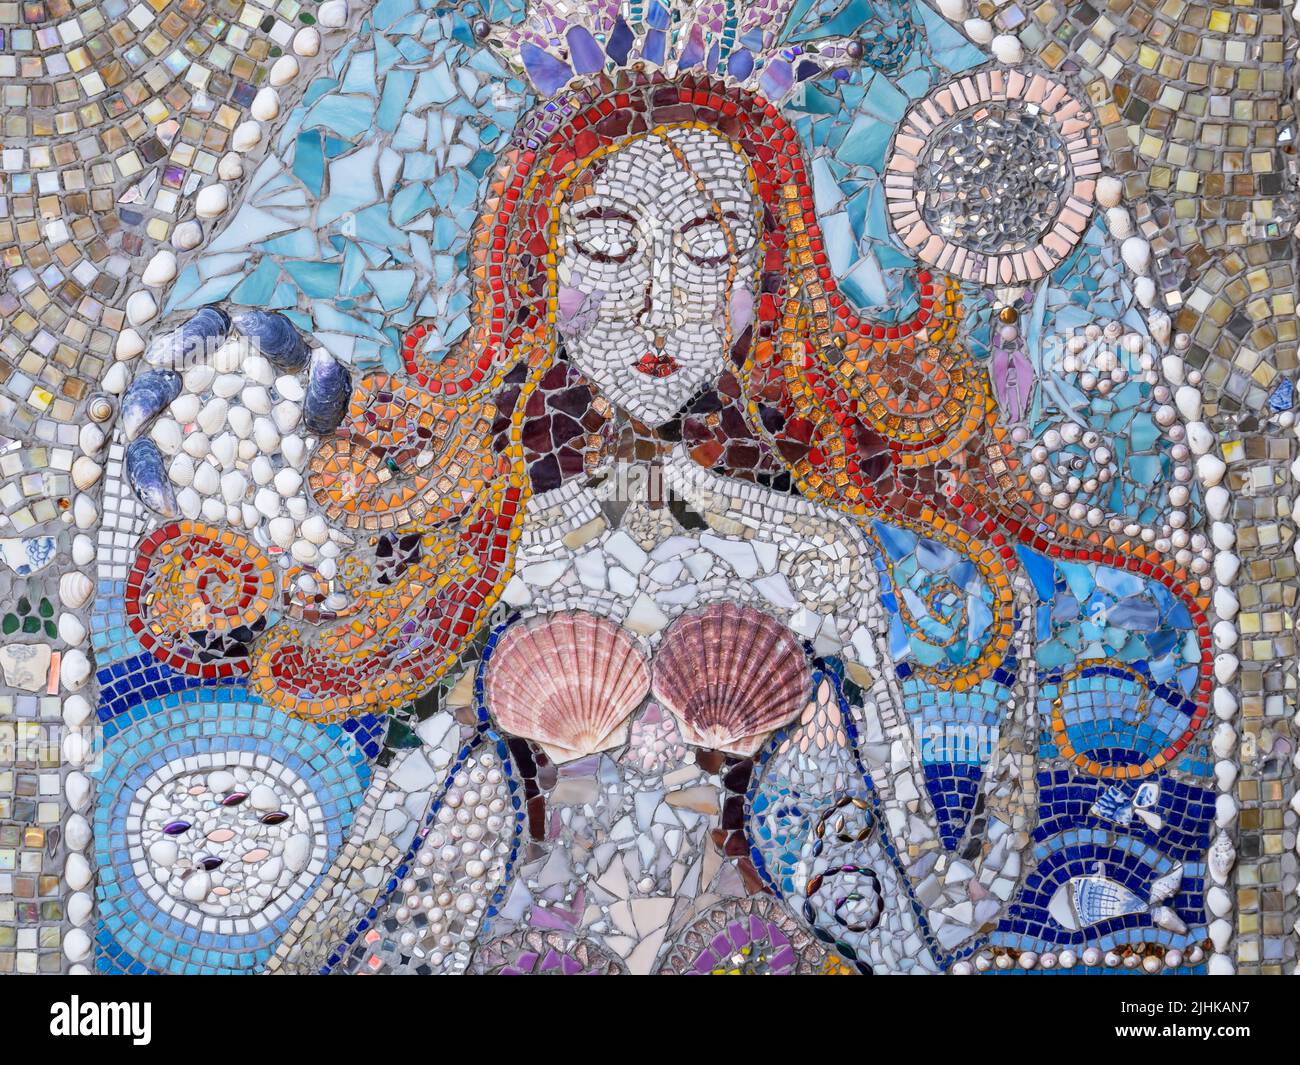 A mermaid mosaic on a house wall in Arbroath in NE Scotland, UK. Stock Photo